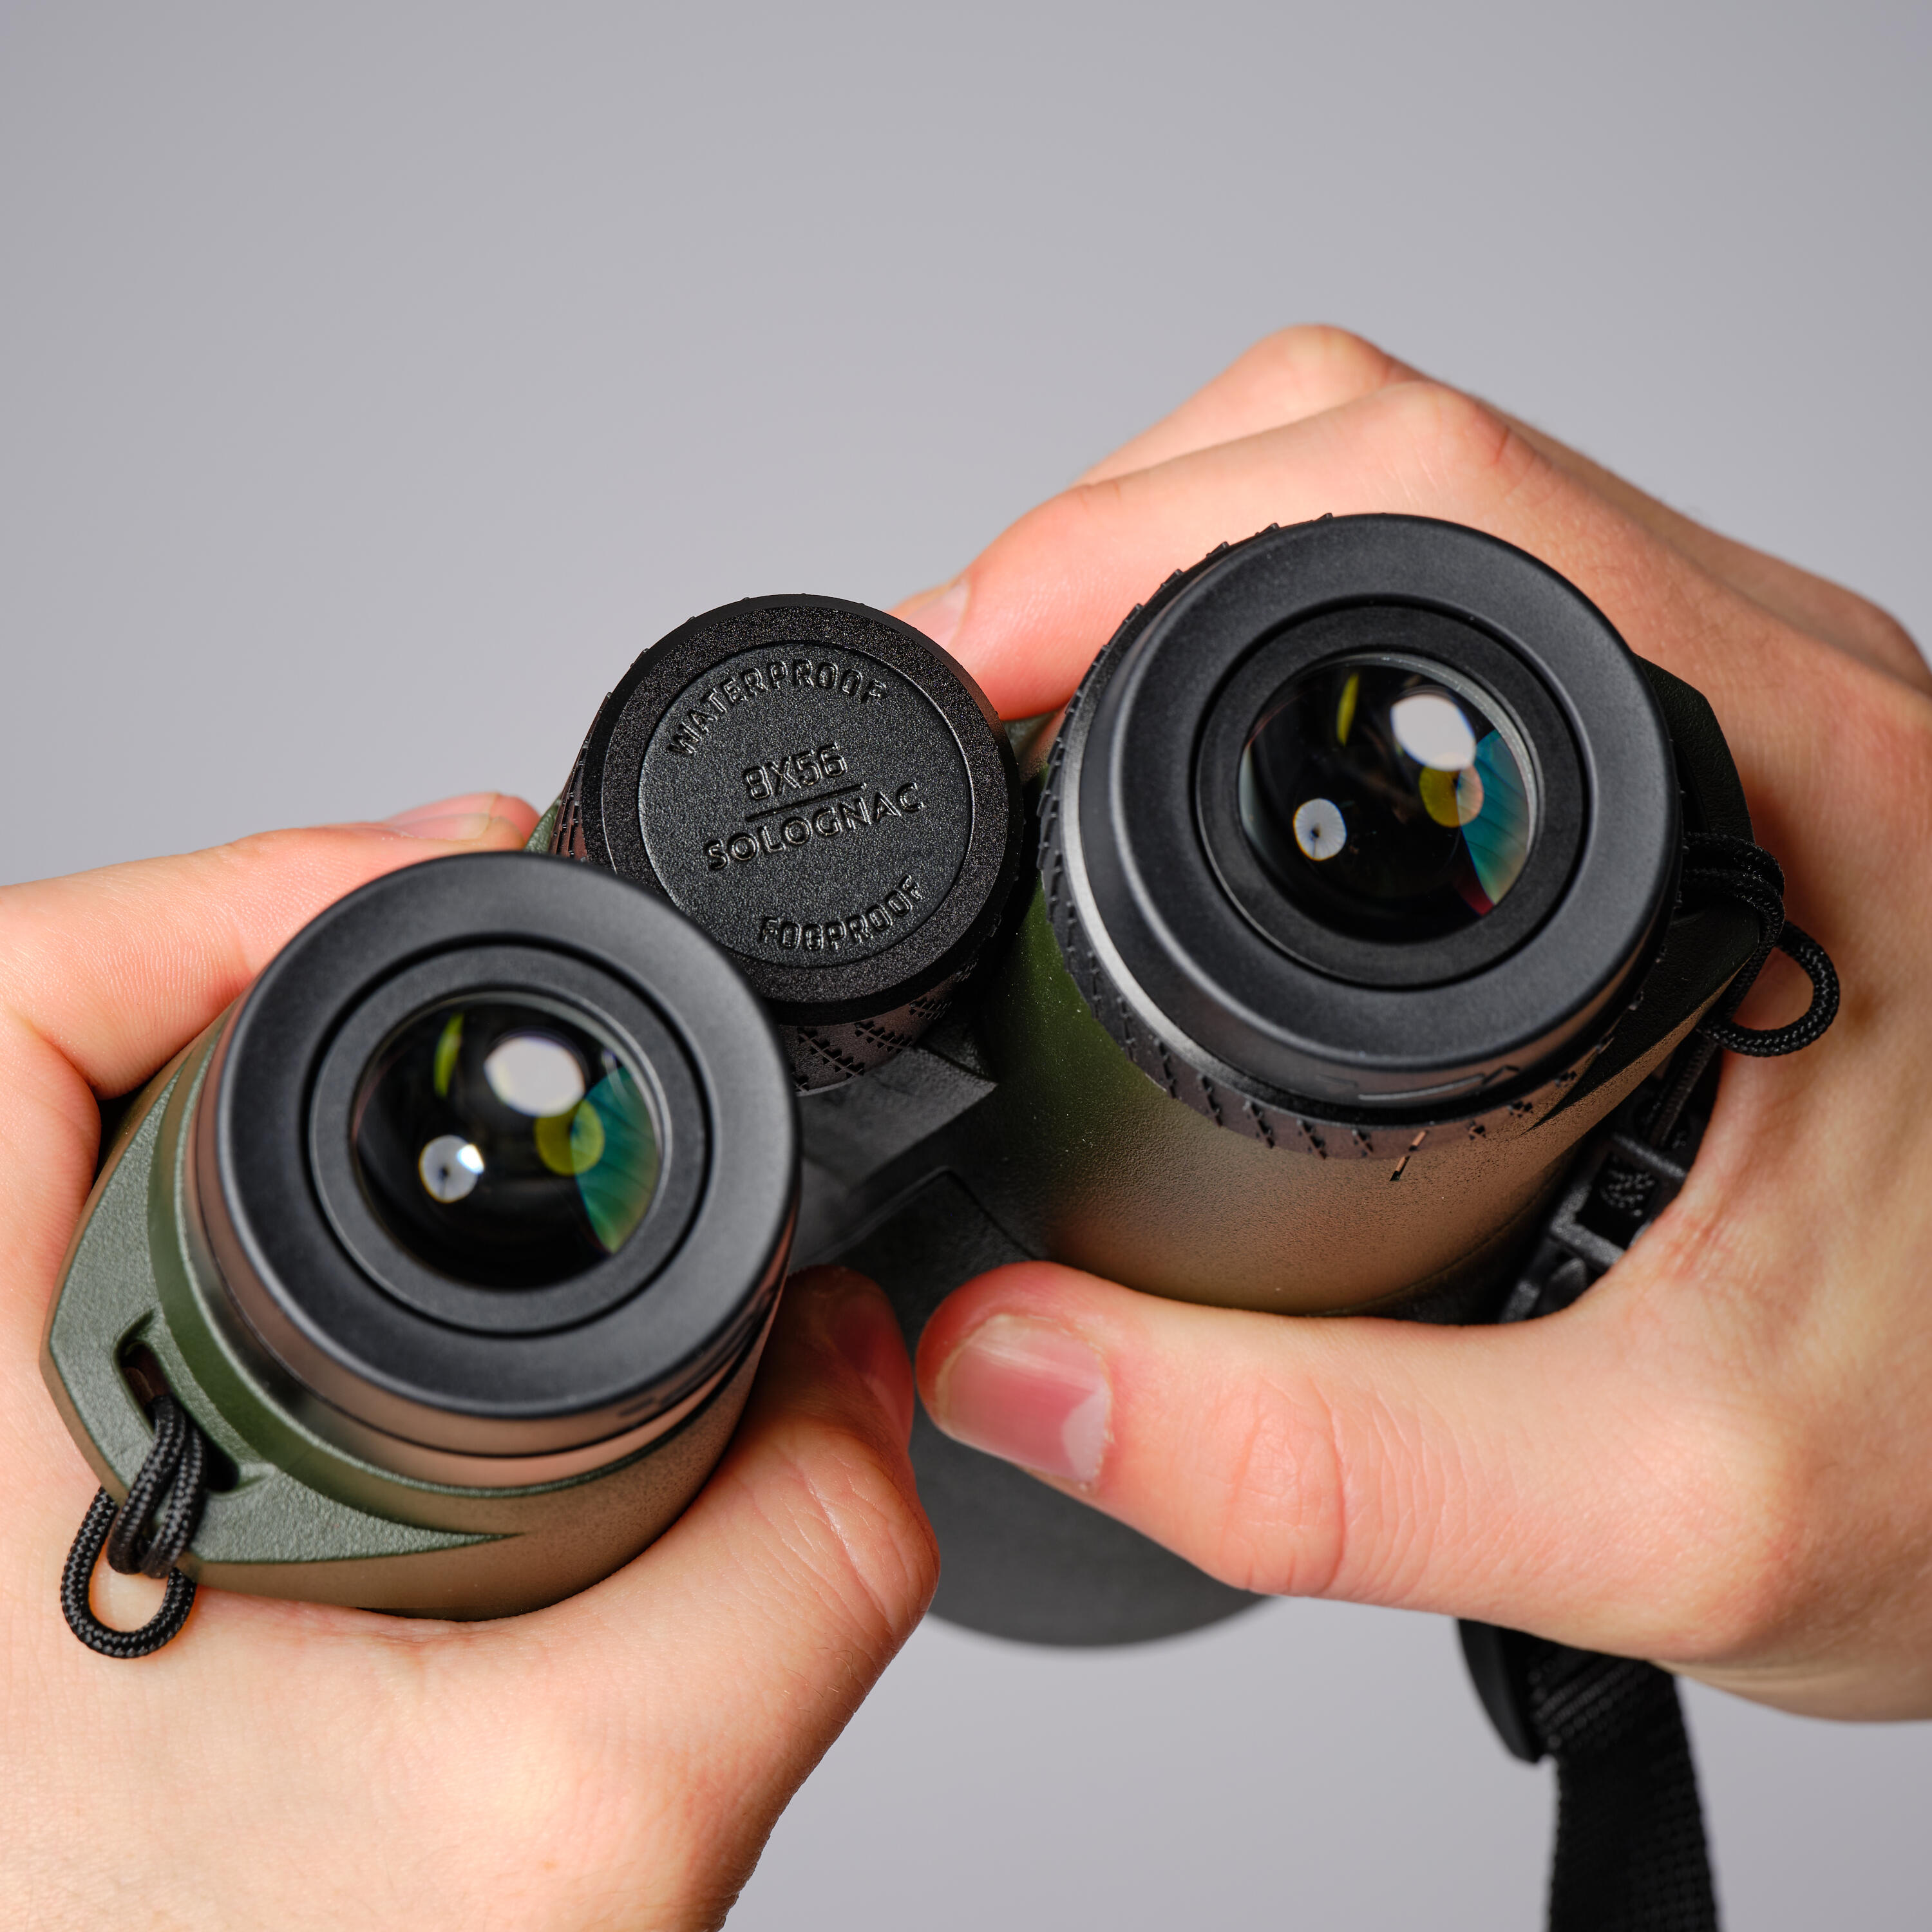 Waterproof hunting binoculars 900 8x56 - khaki 9/11